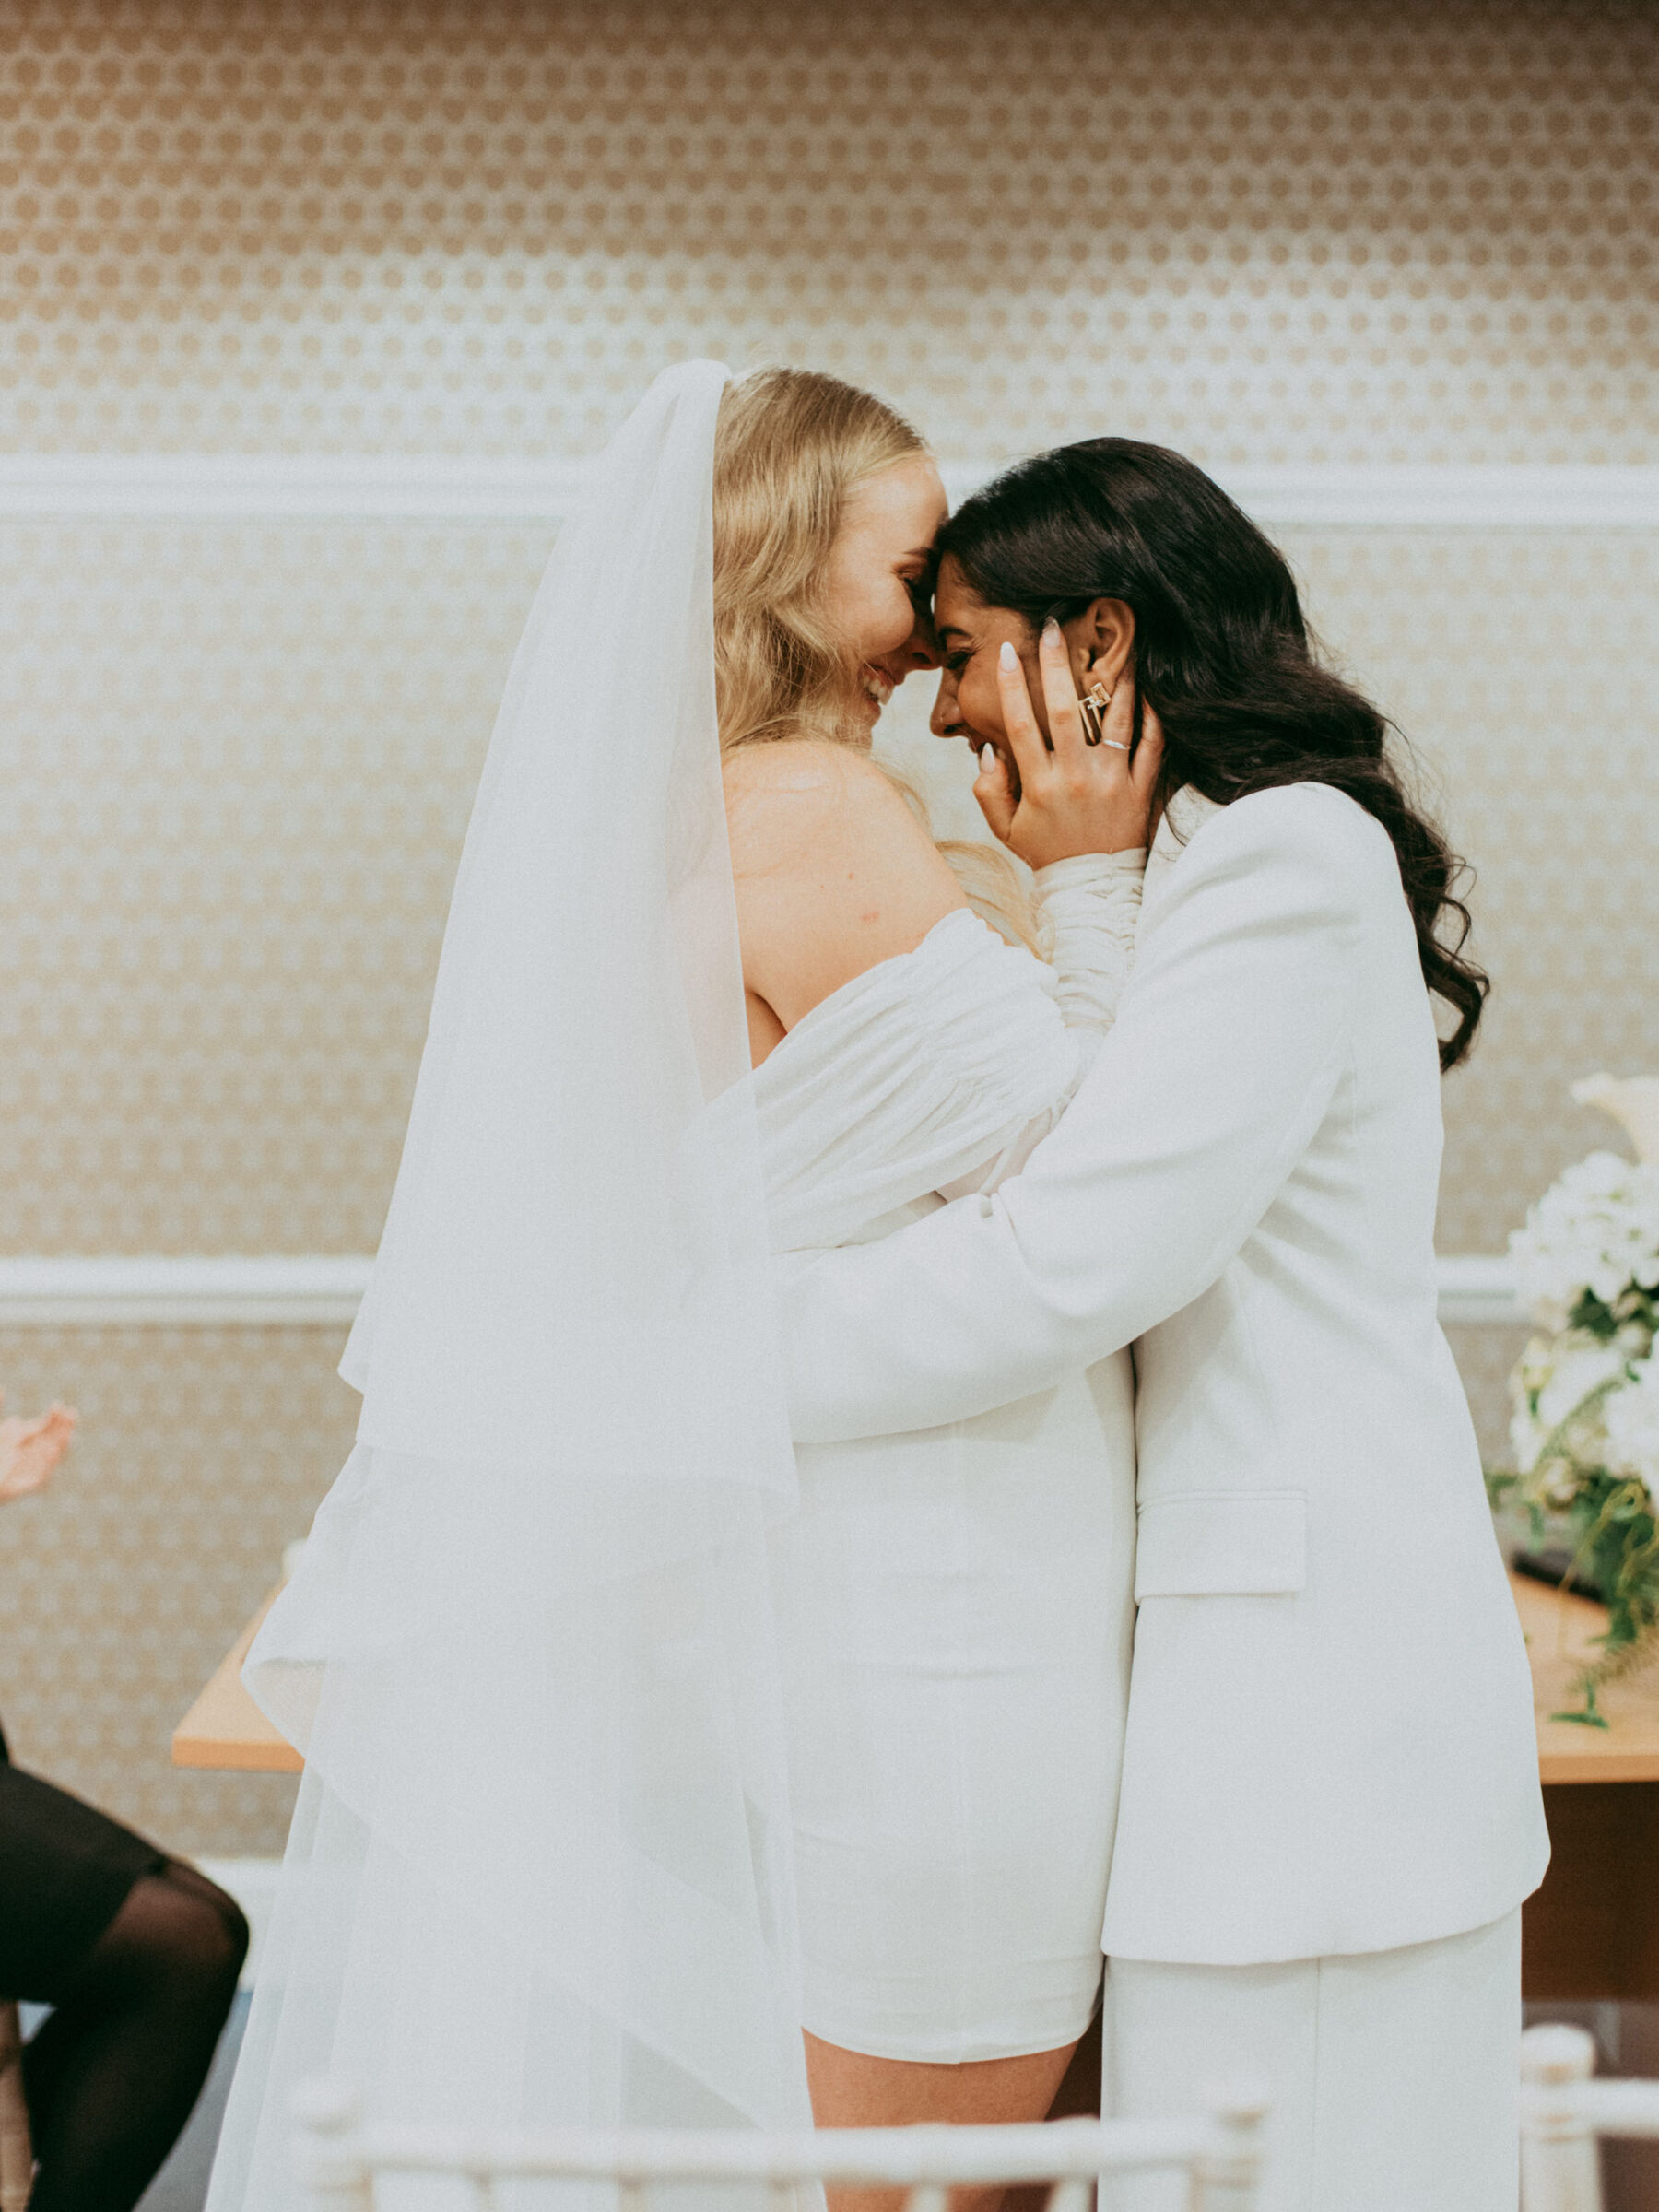 Lesbian wedding ceremony. Daniel Mice Photography.